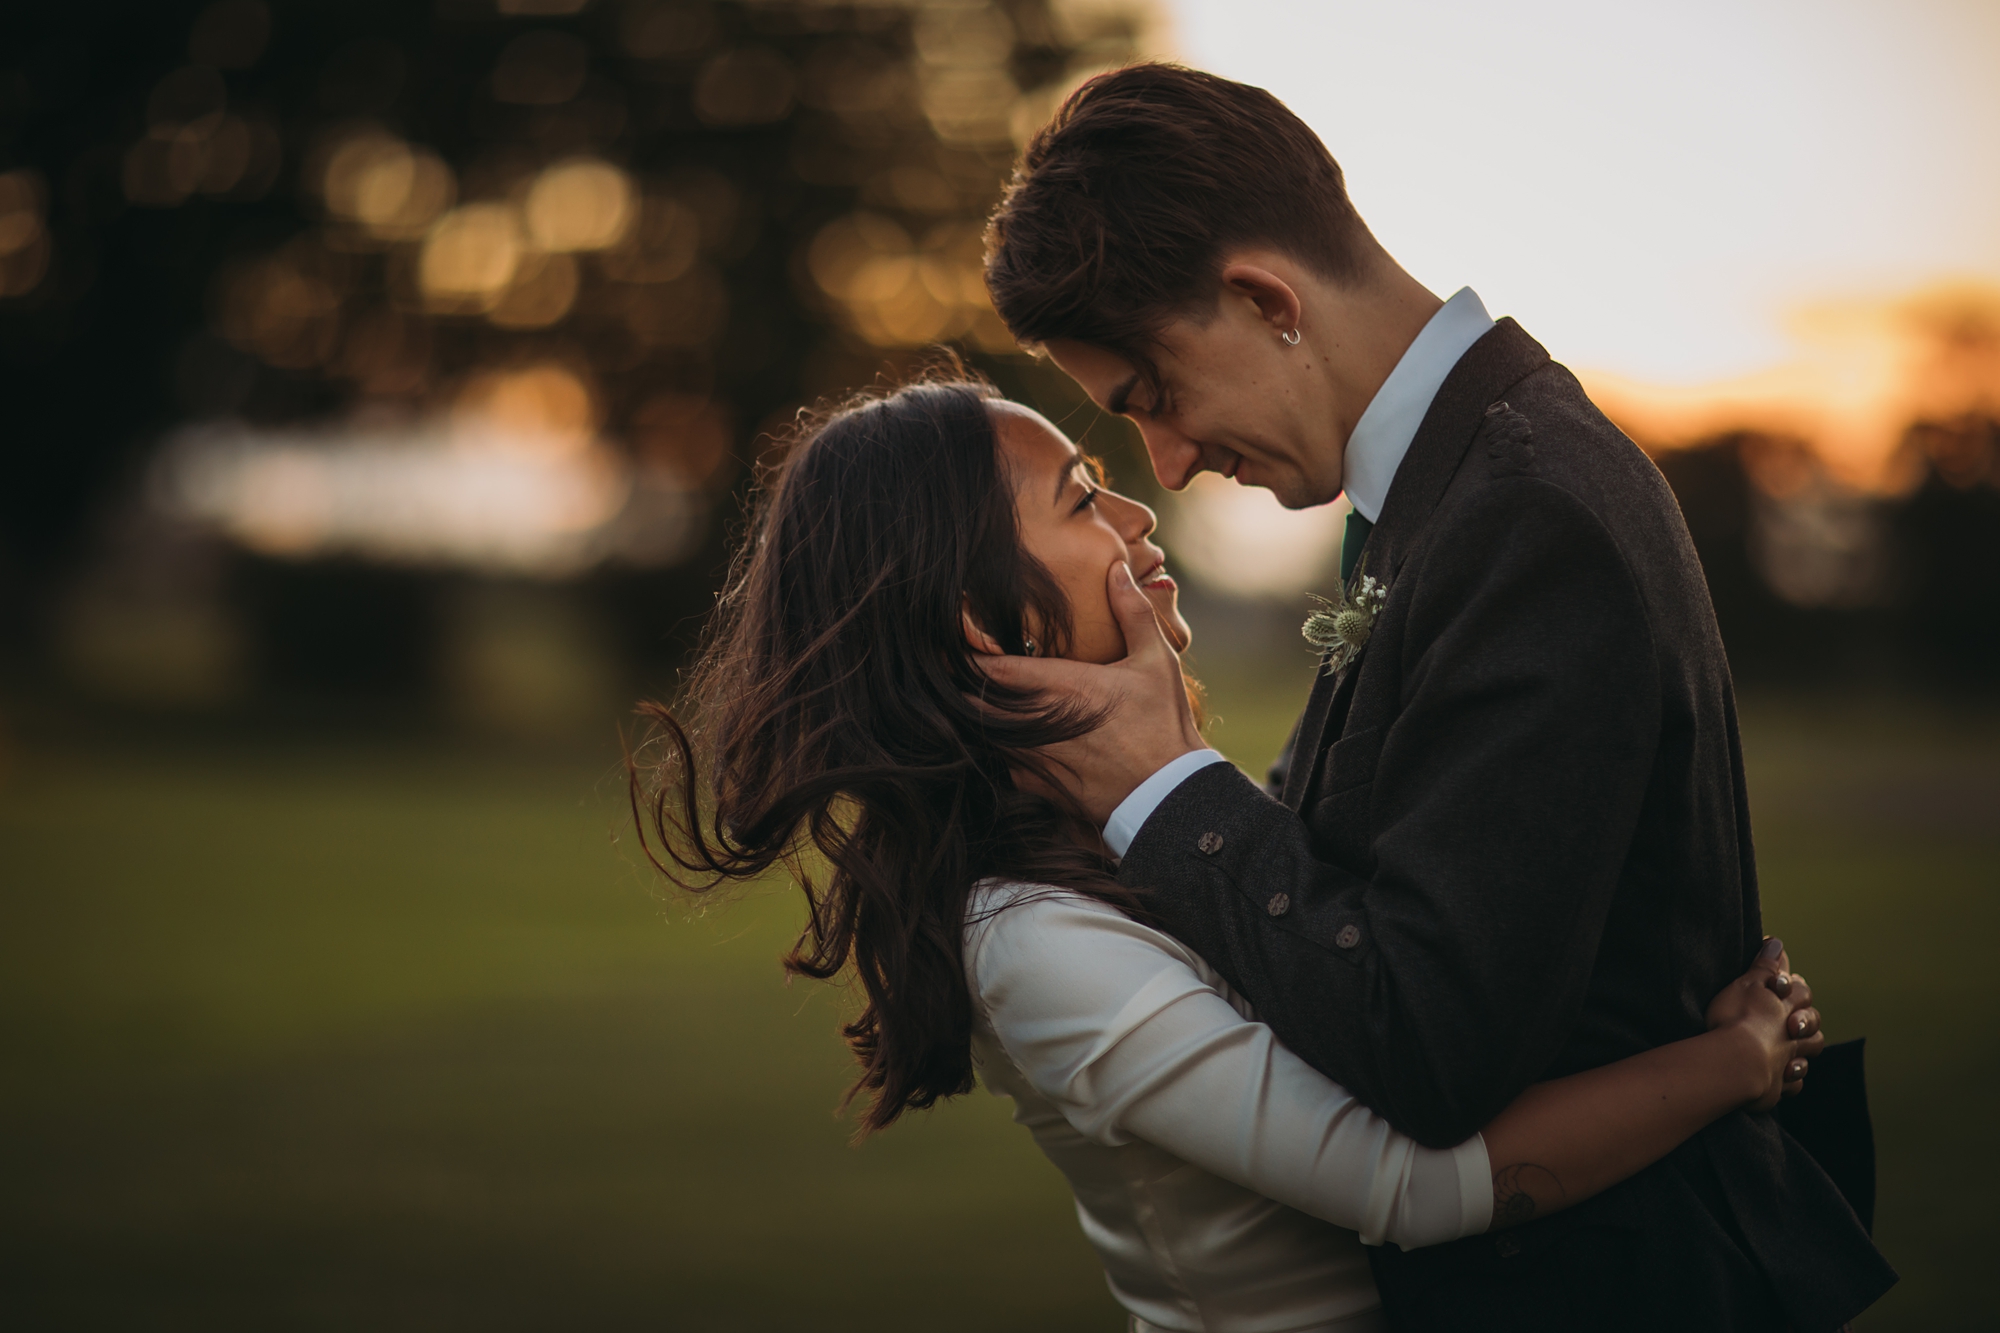 Couple embrace at Dunglass Estate during sunset - best wedding photographs